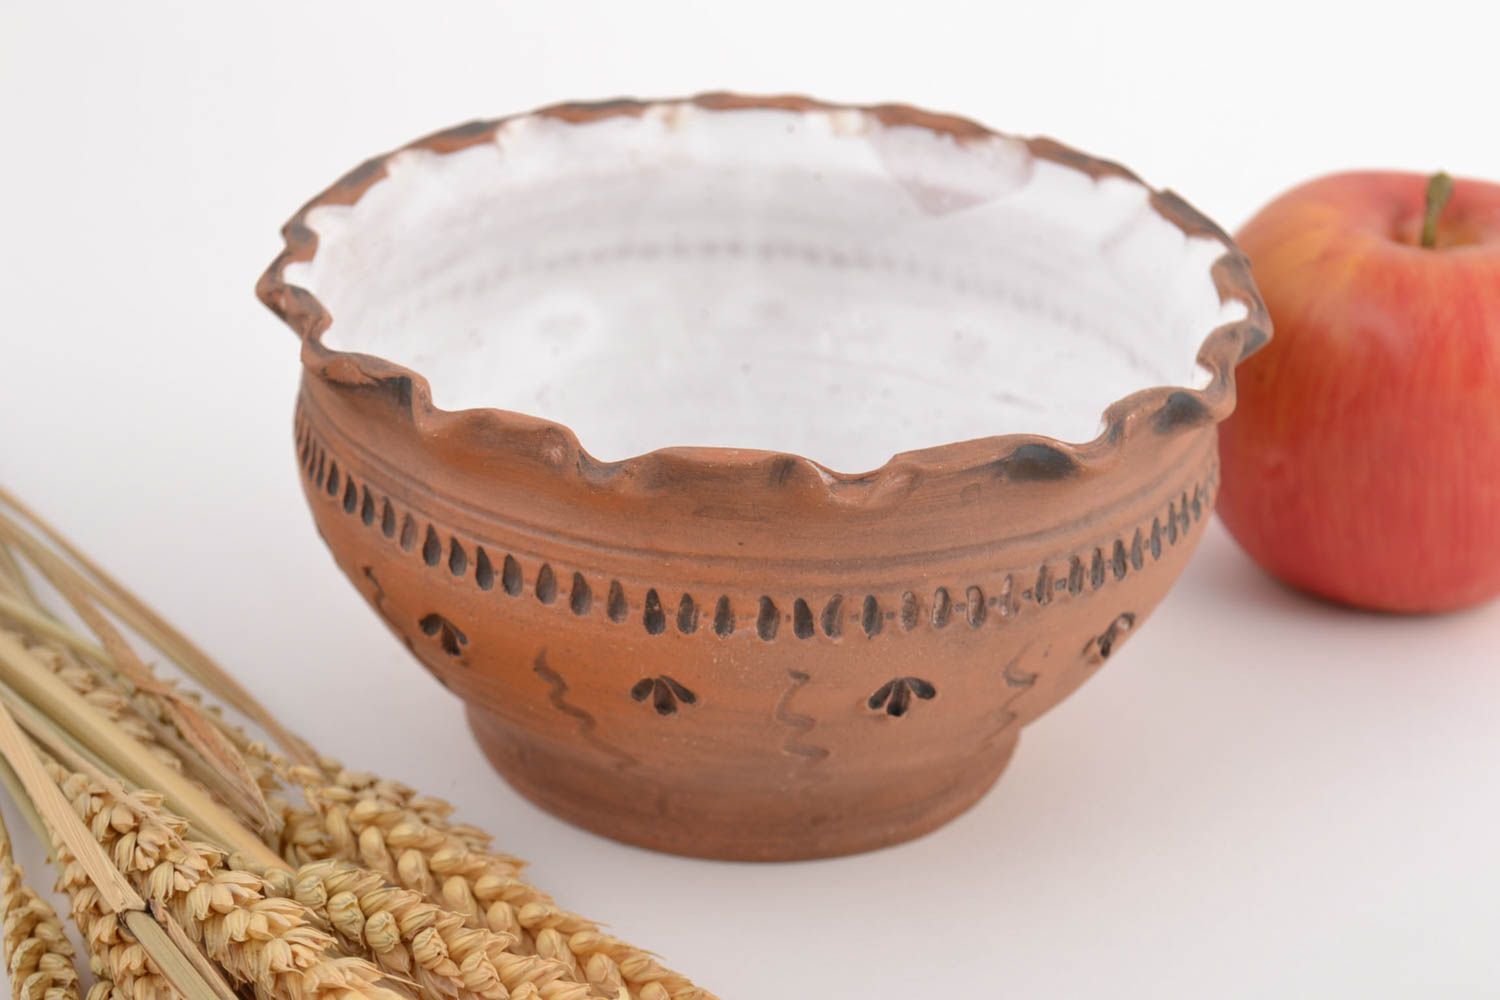 6 15 oz white glaze mixing bowl handmade kitchen pottery 0,85 lb фото 1